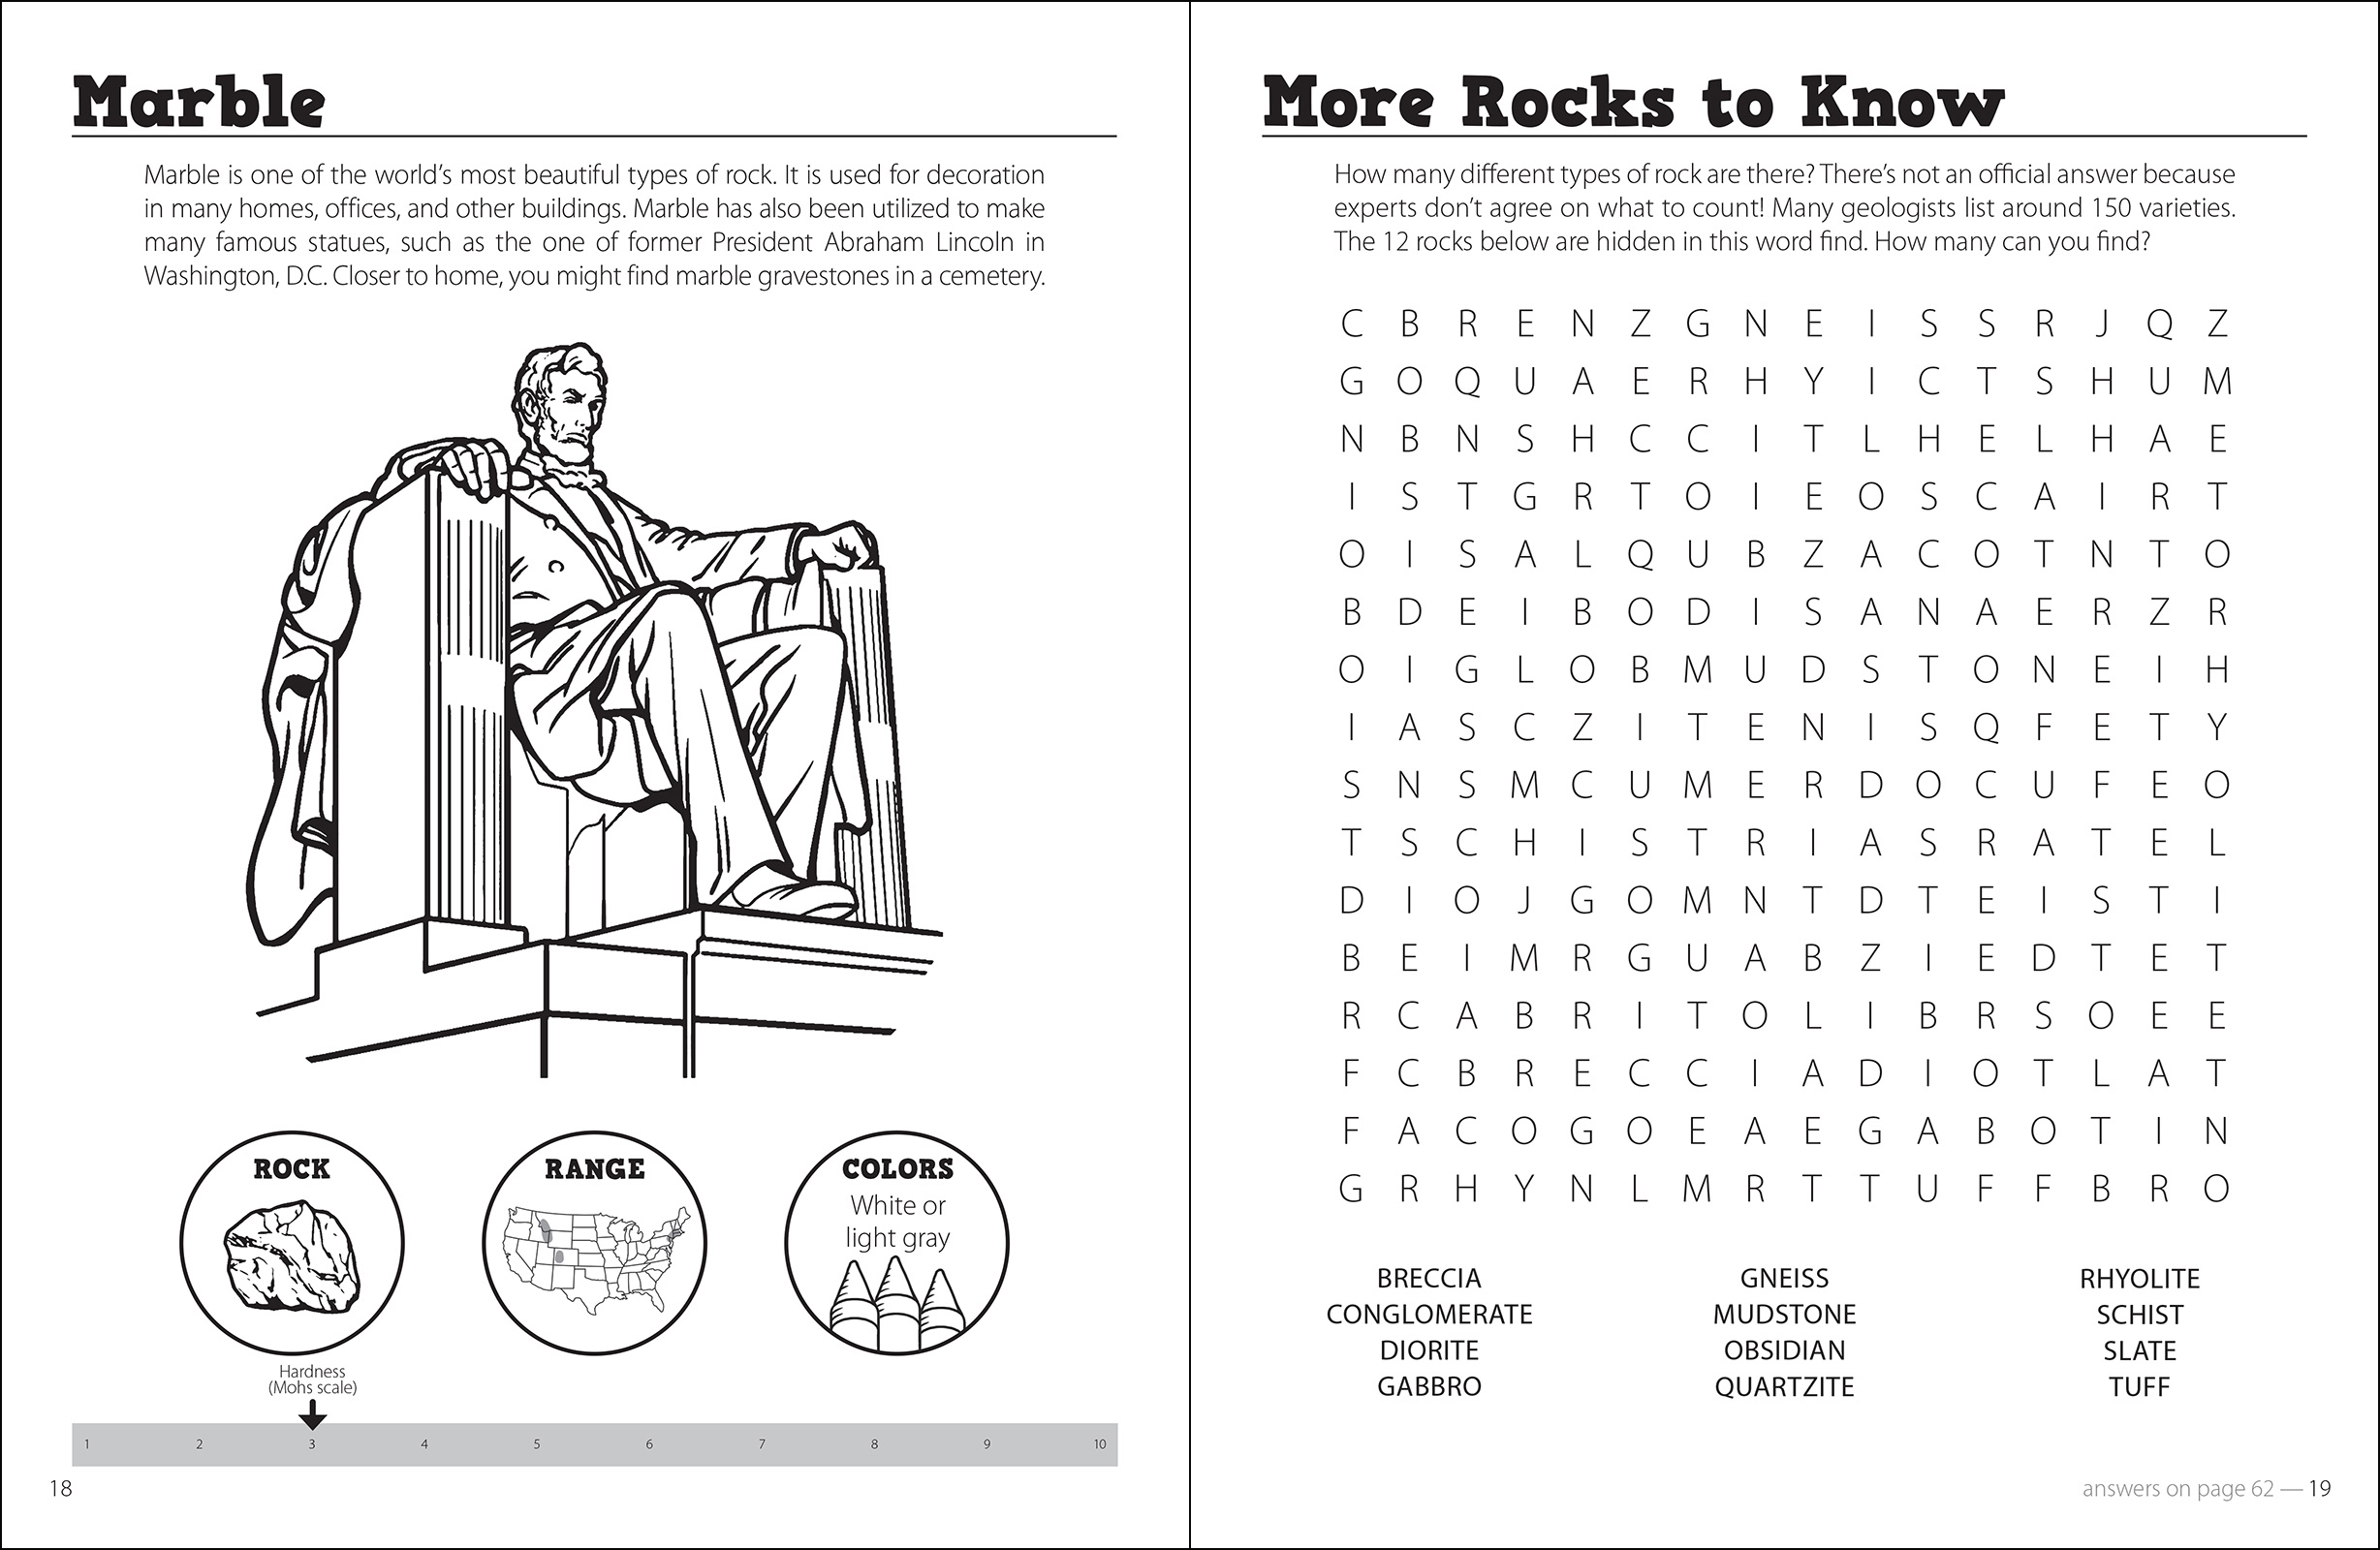 Rocks & Minerals Activity Book